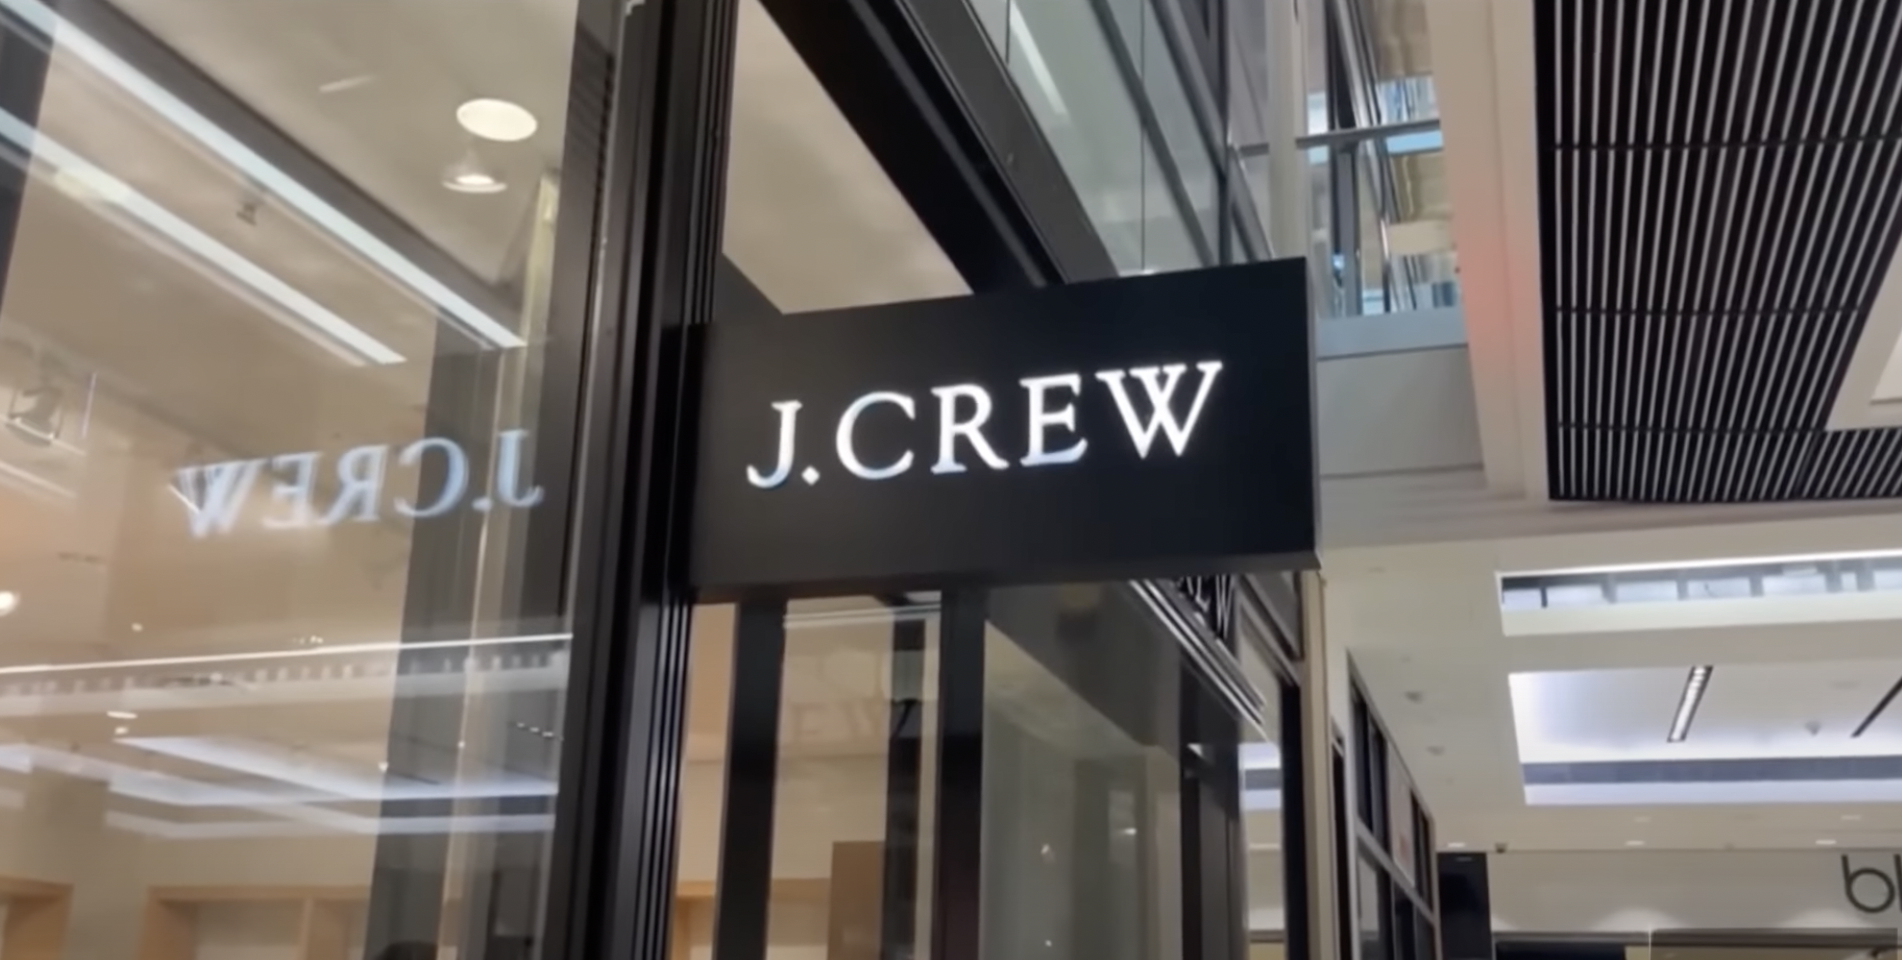 j crew store-front